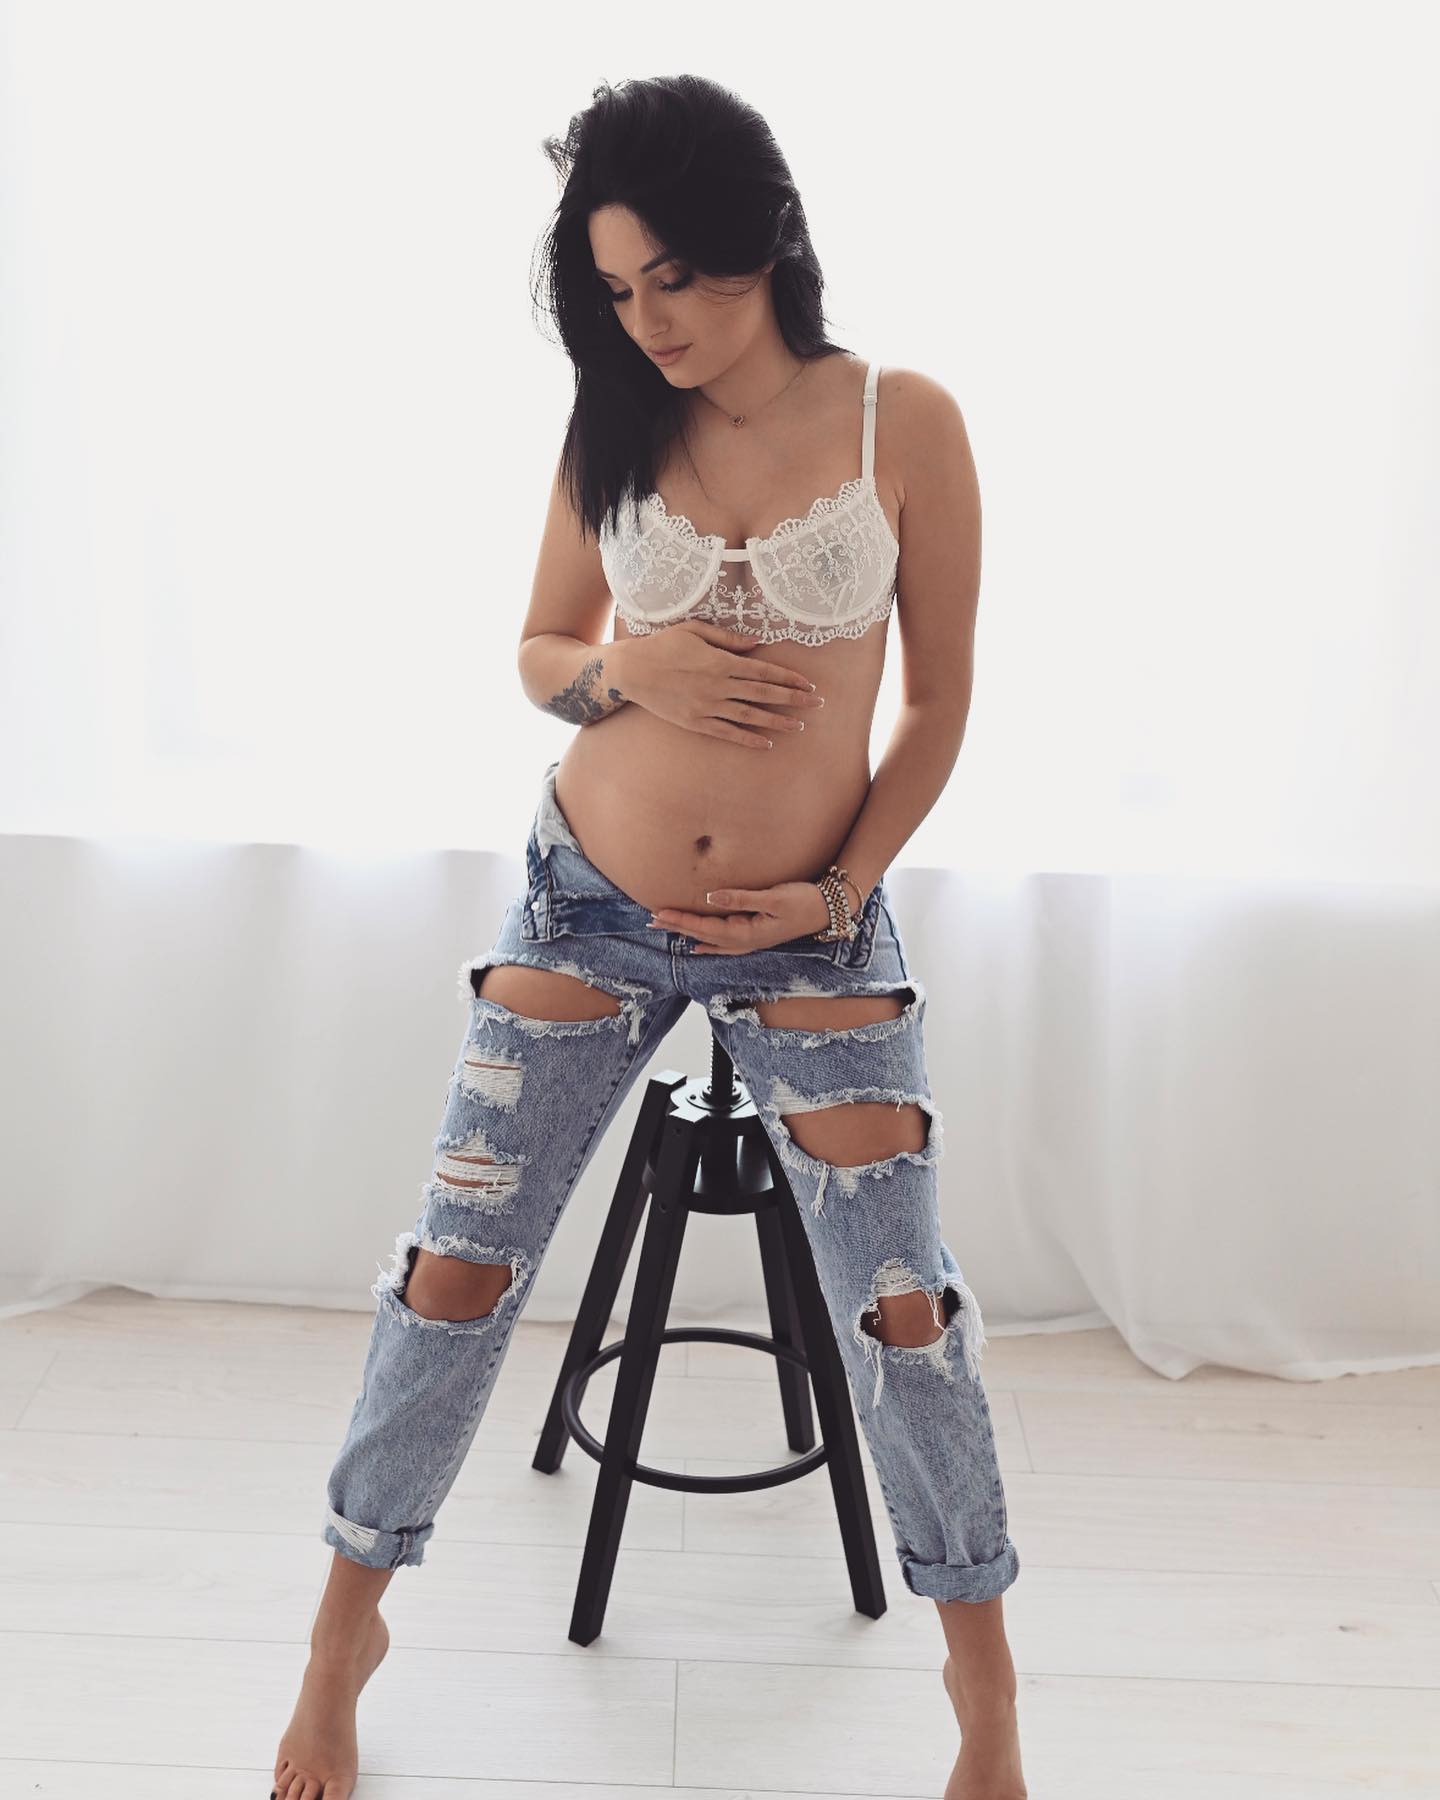 Ana je prečudovita nosečka. Vir: Instagram